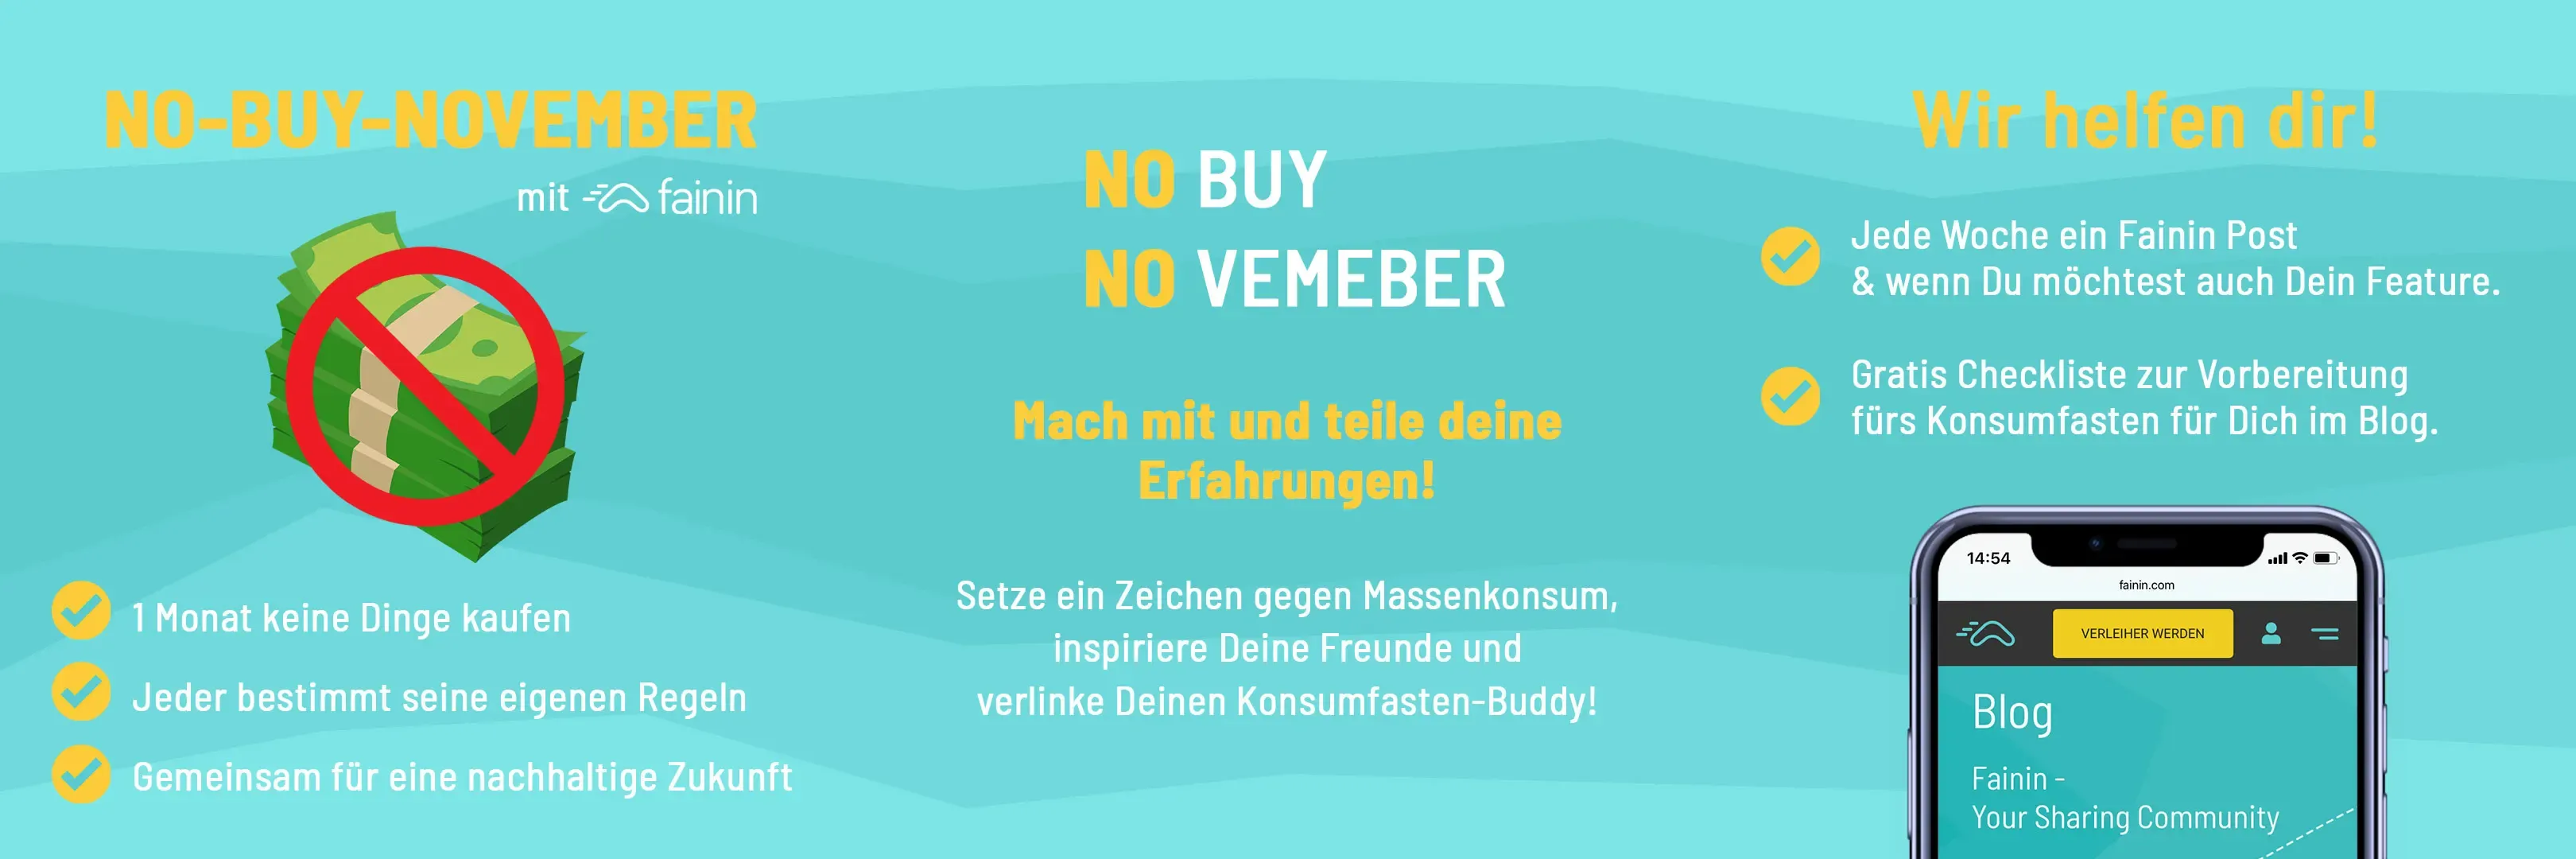 No-Buy-November-Challenge